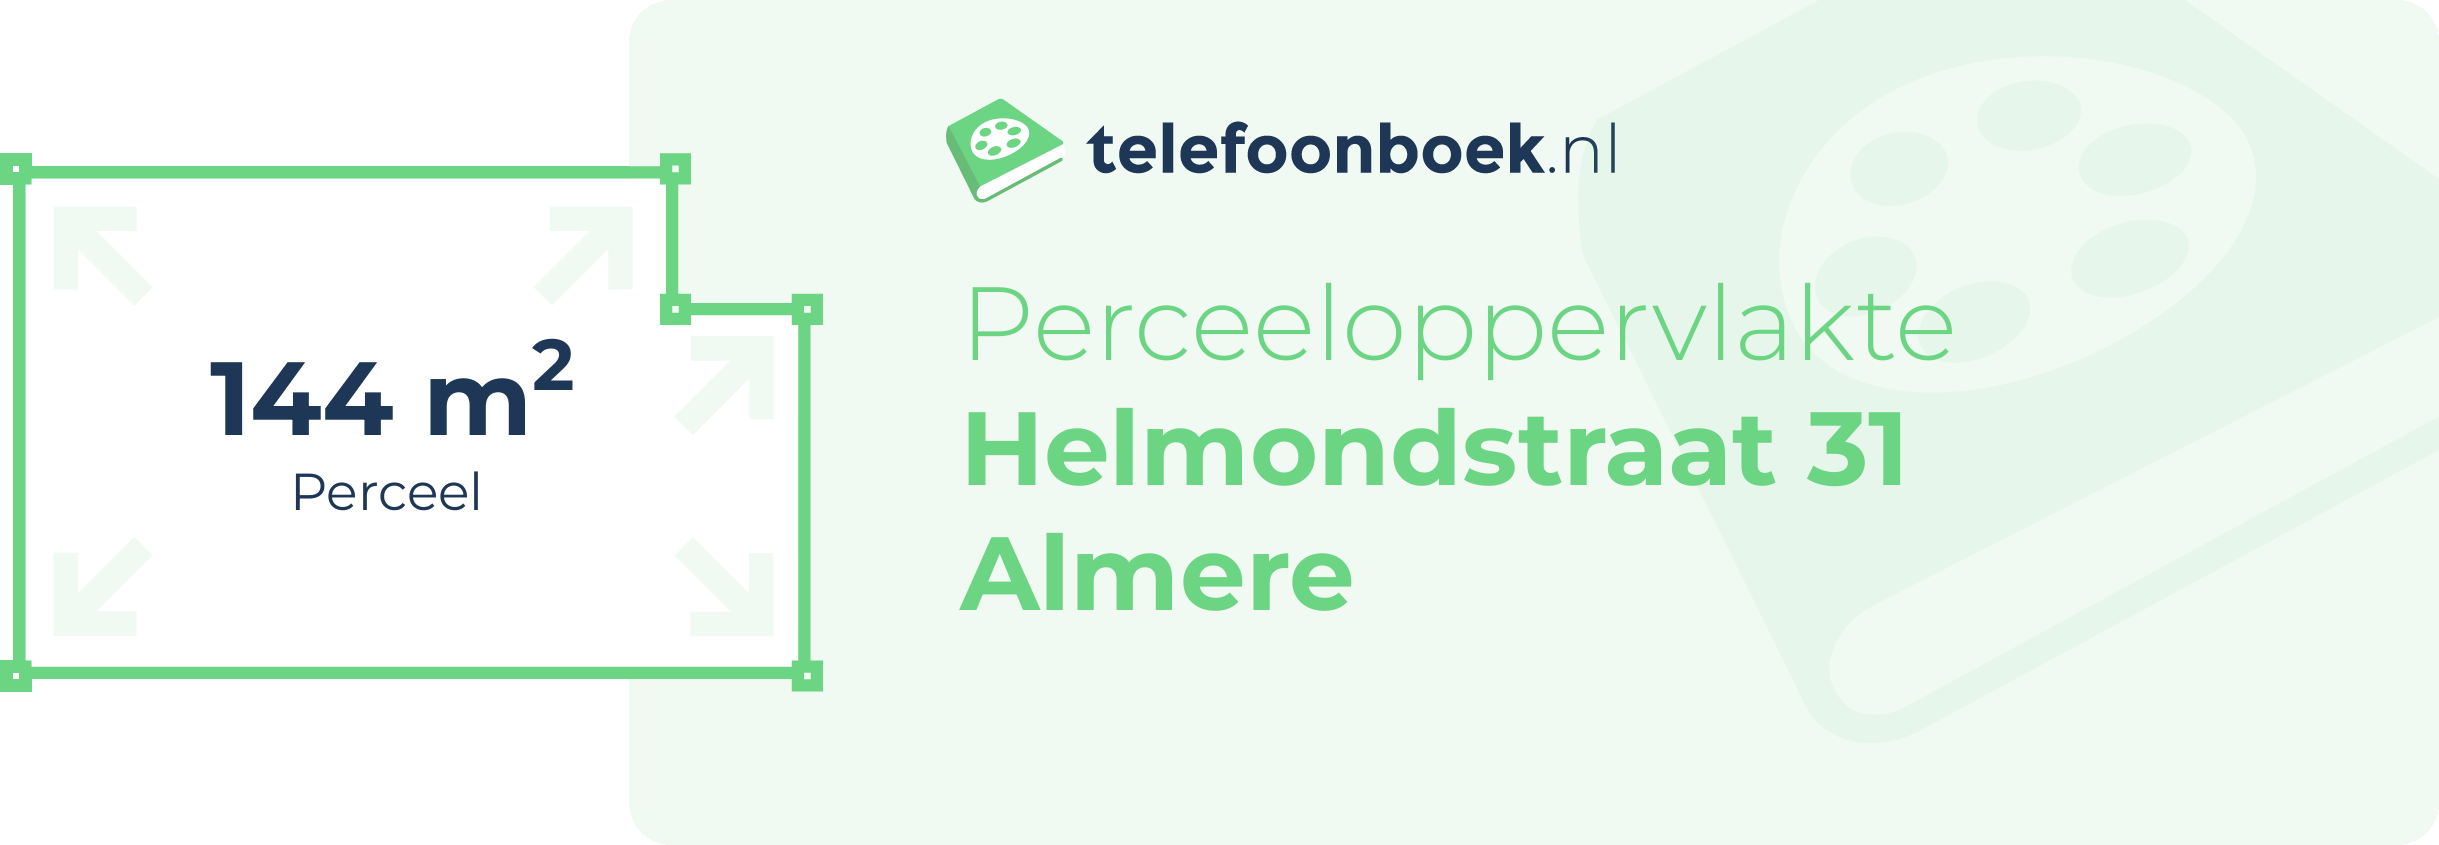 Perceeloppervlakte Helmondstraat 31 Almere